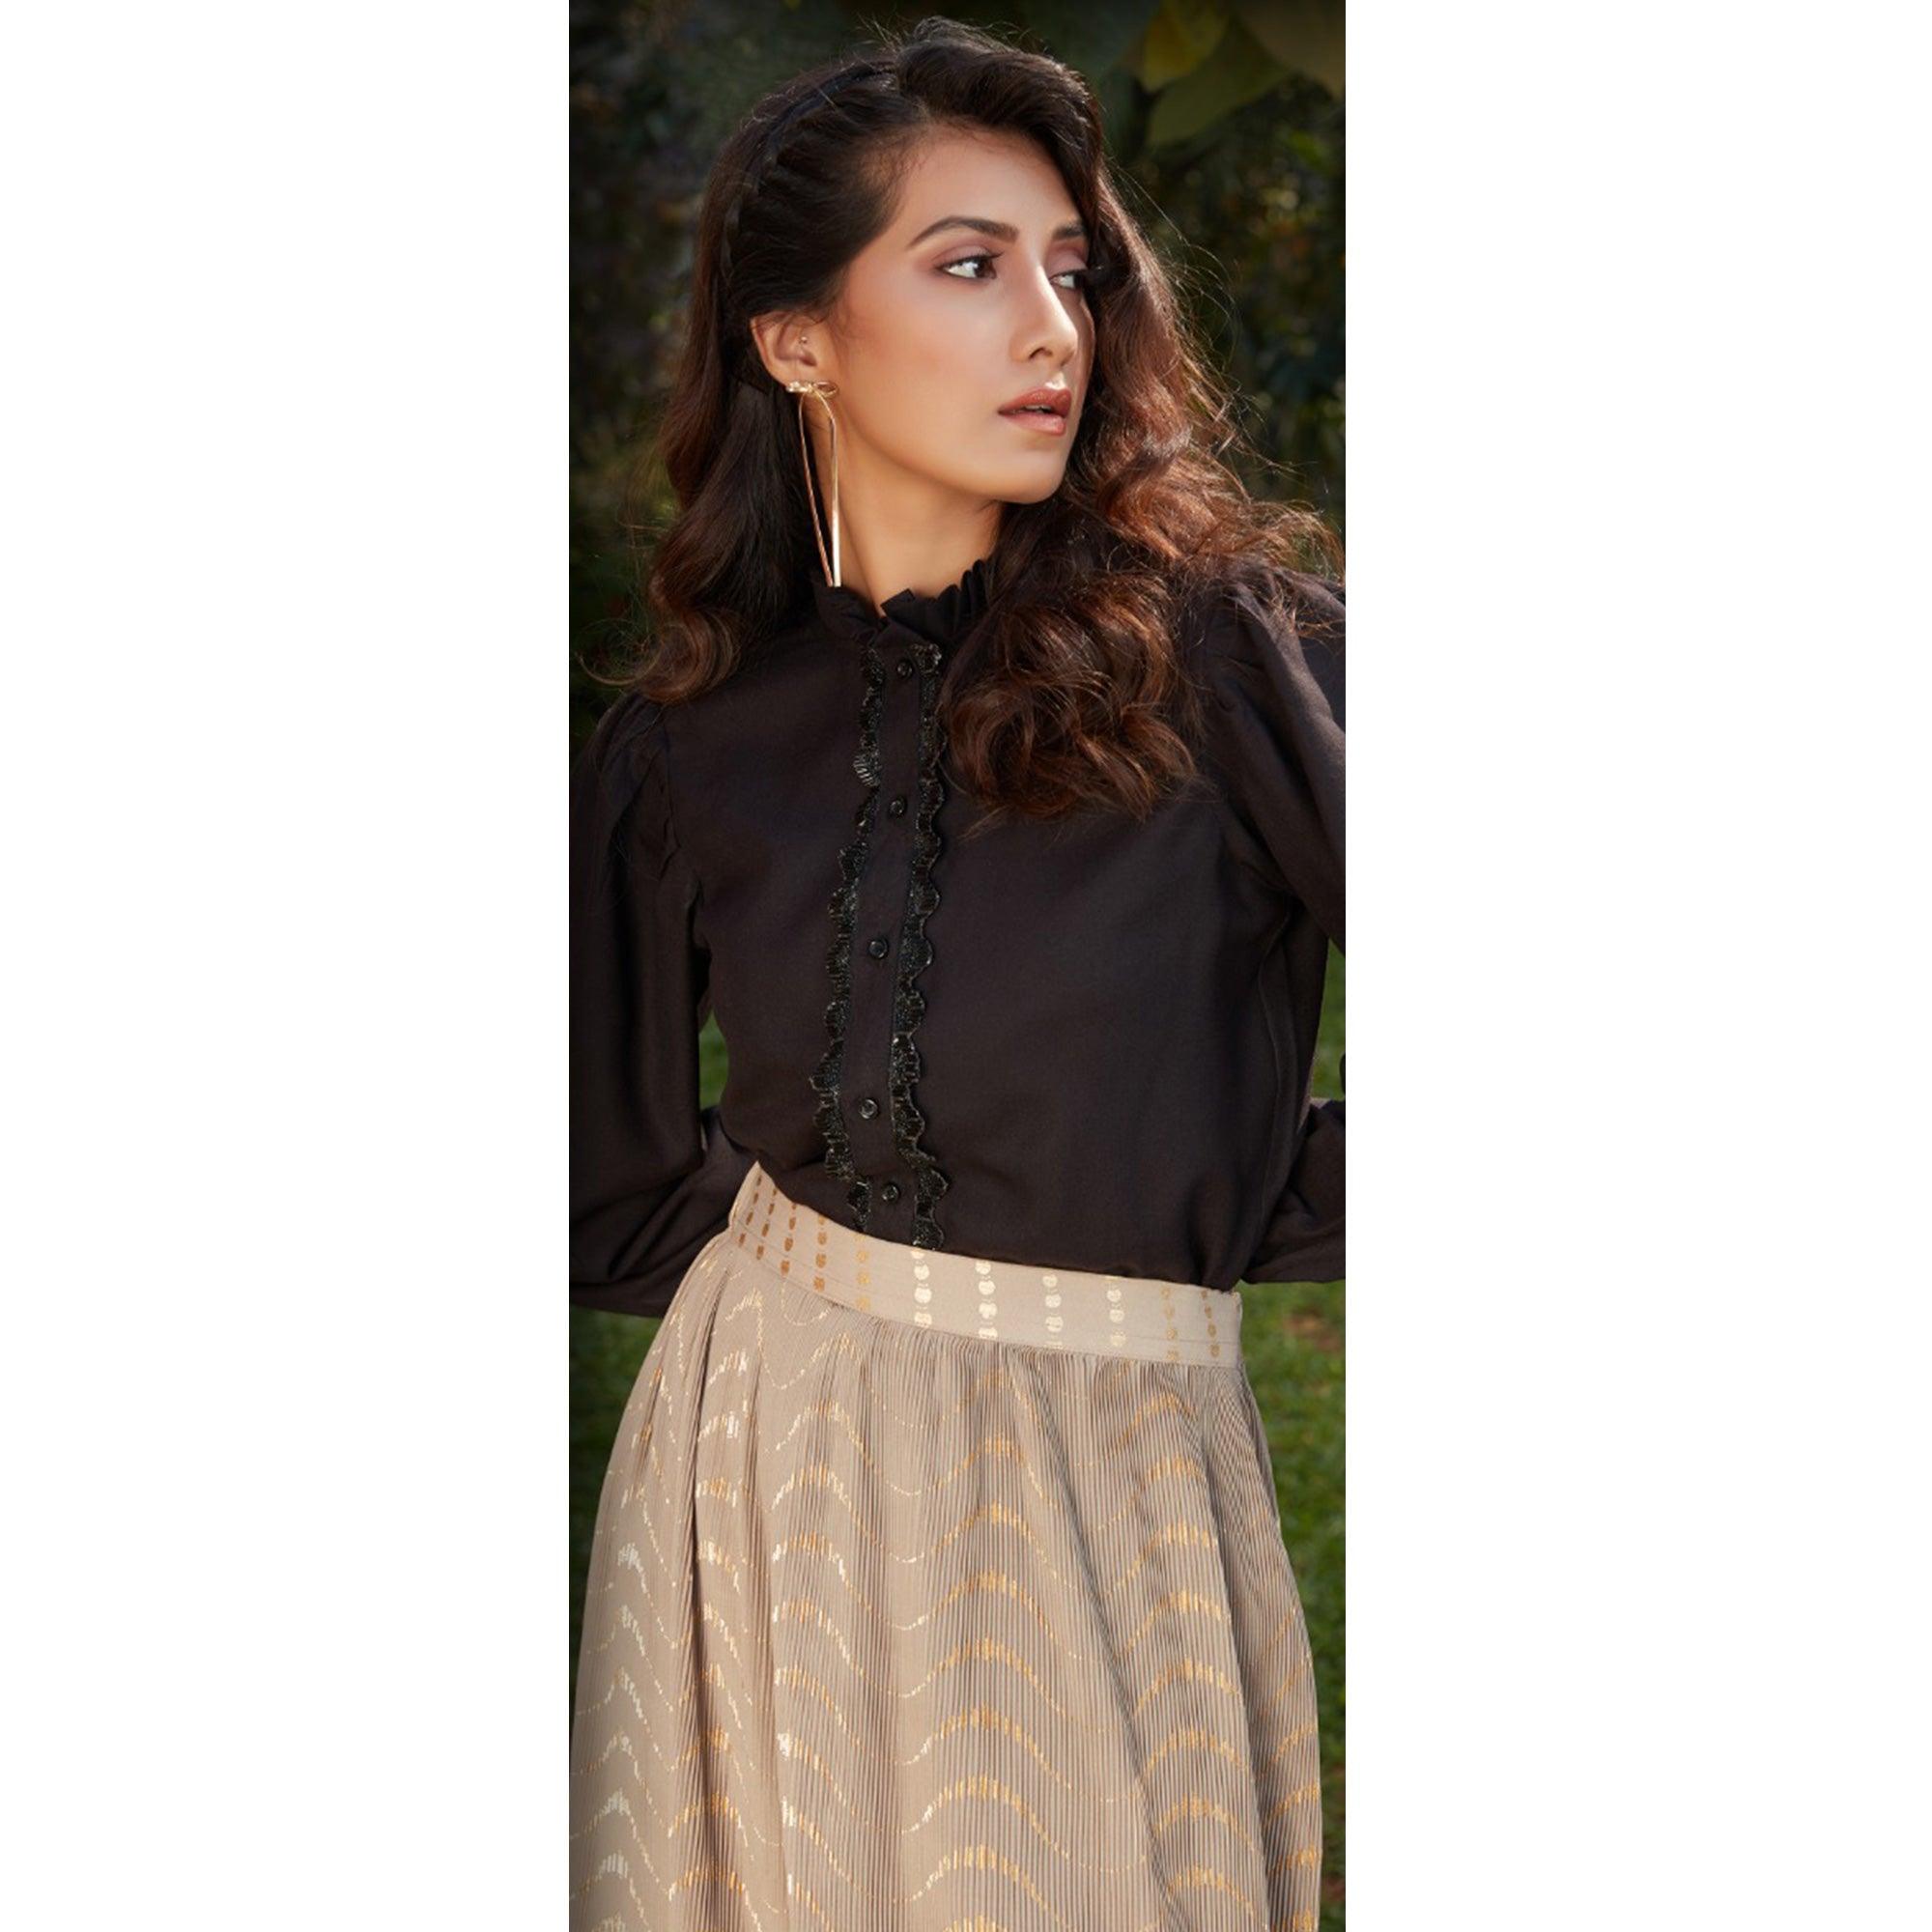 Charming Black-Beige Colored Casual Wear Printed Western Crop Top - Skirt Set - Peachmode